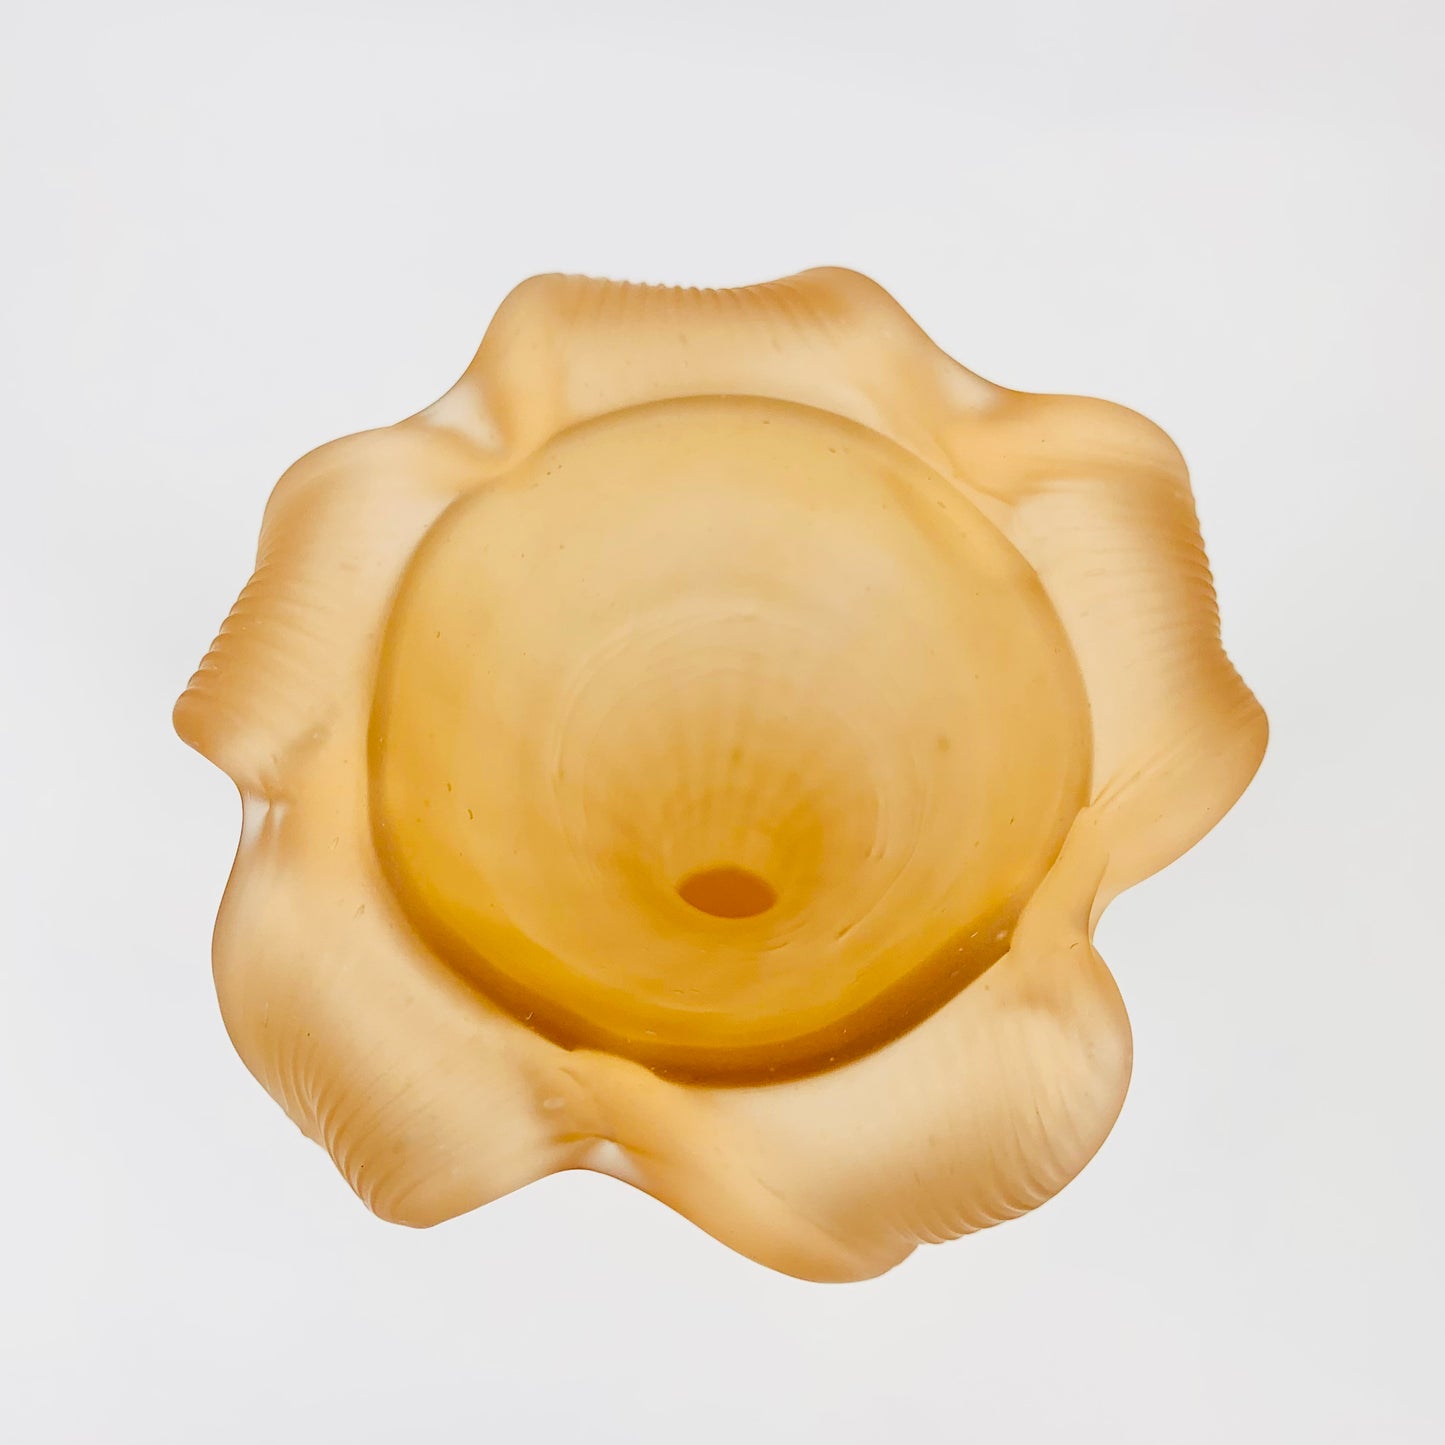 Extremely rare antique Art Nouveau peach satin glass small palm vase